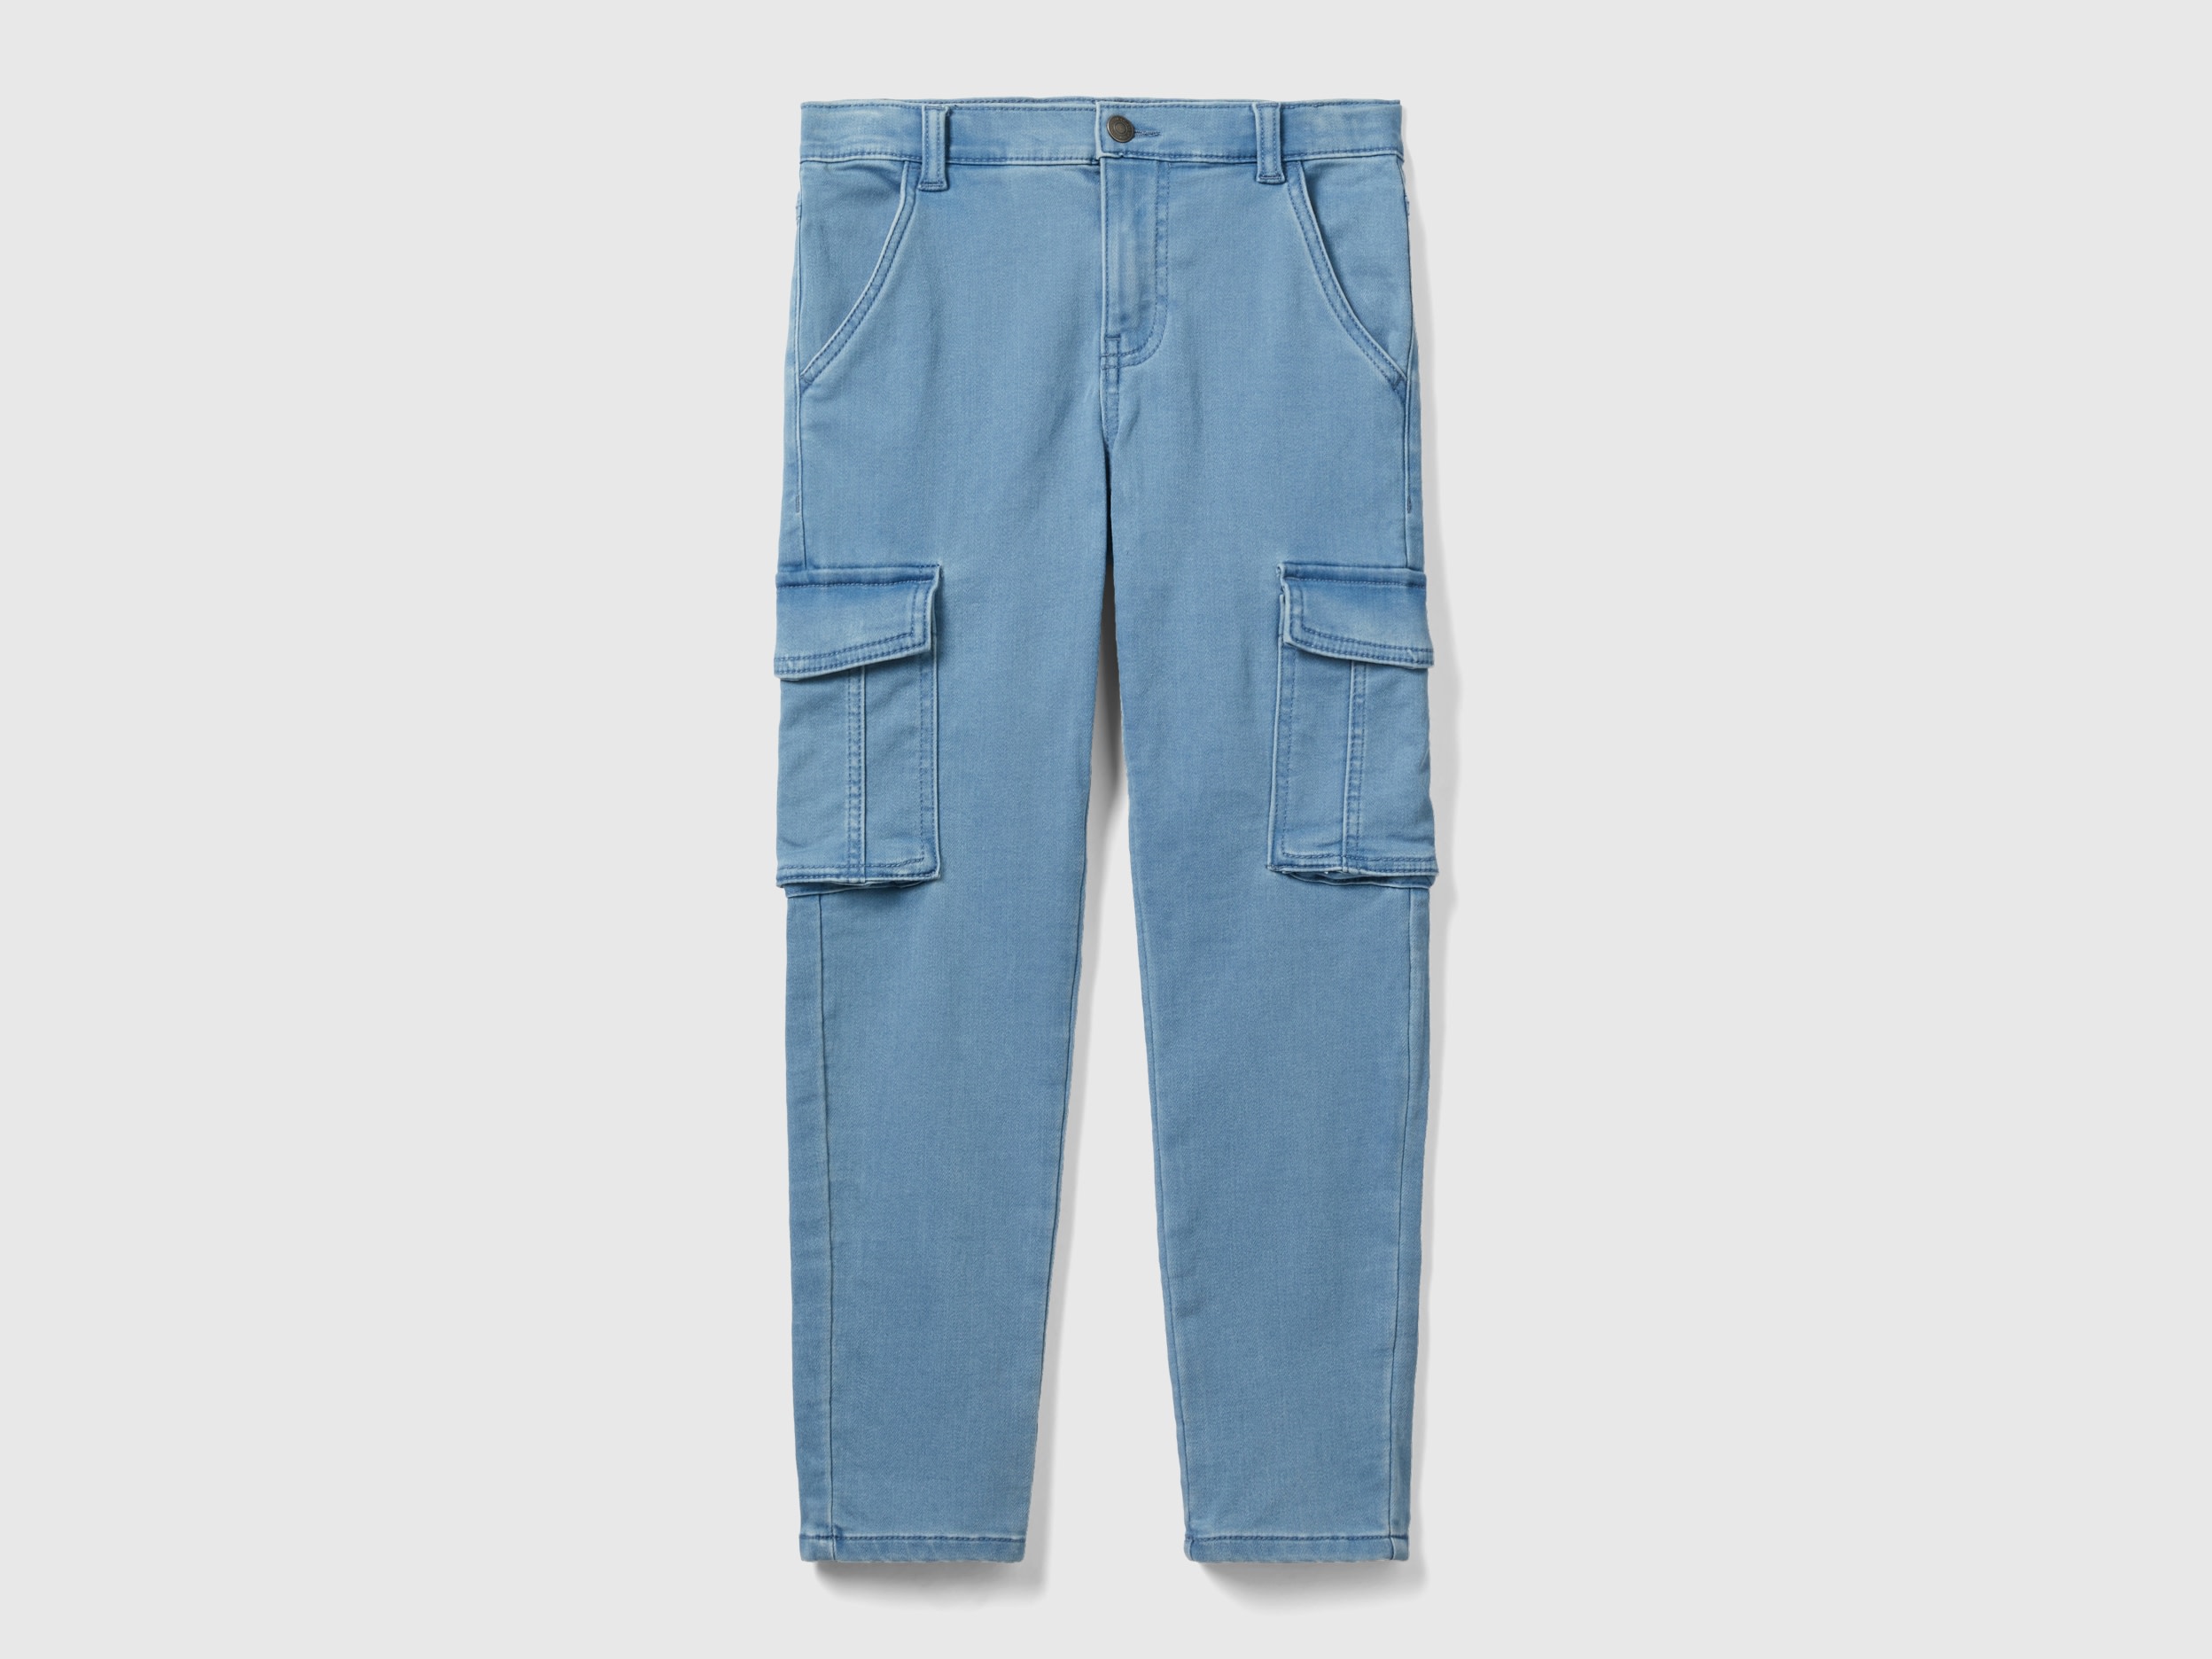 Benetton, Slim Fit Jeans With Pockets, size 3XL, Light Blue, Kids